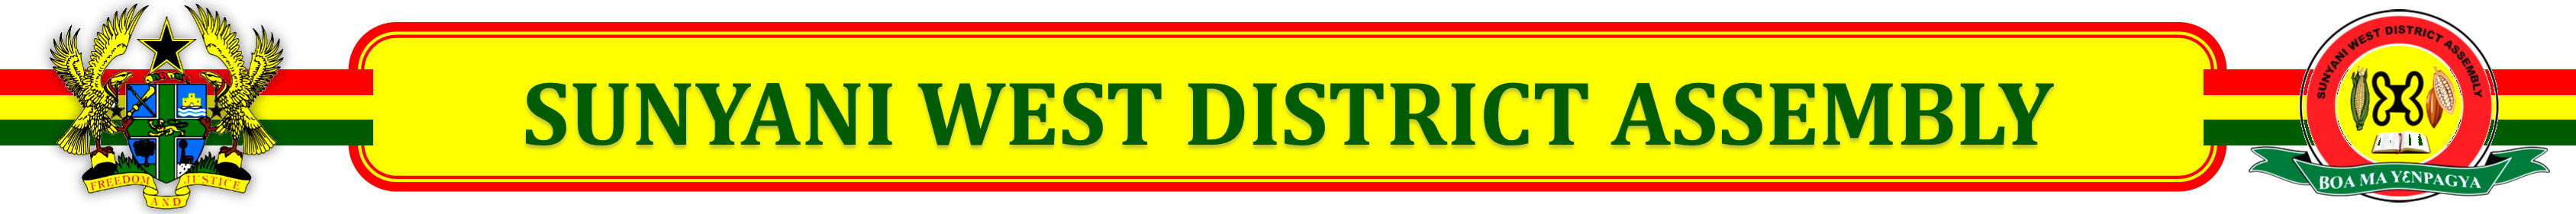 Sunyani West District Assembly Logo